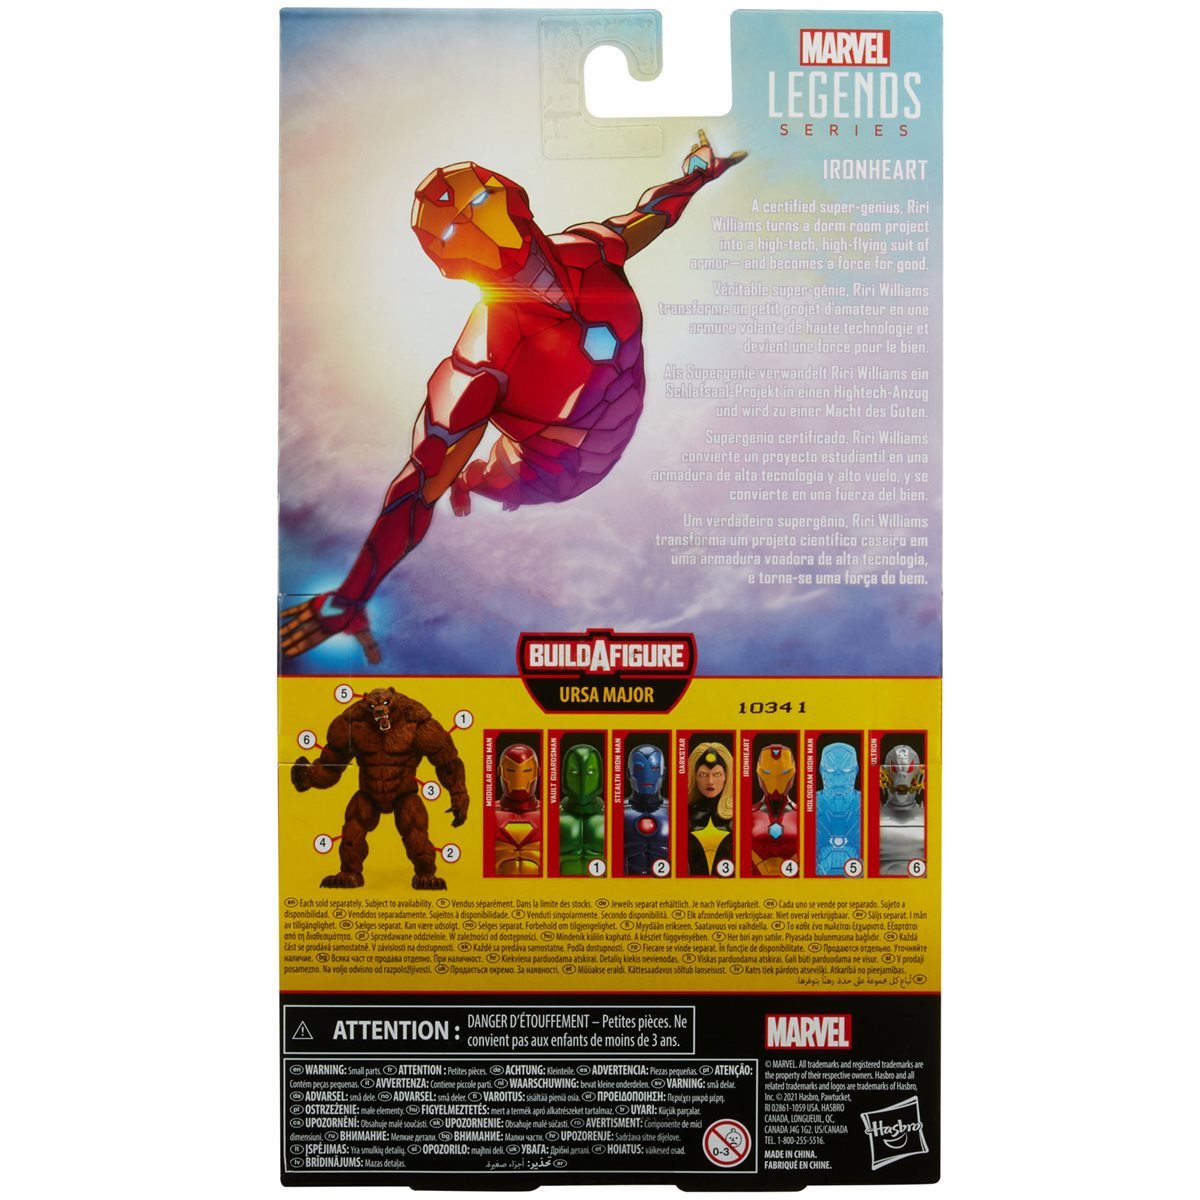 Marvel Legends Ursa Major build a figure wave Comic Ironheart Riri Williams 6-inch figure packaging back